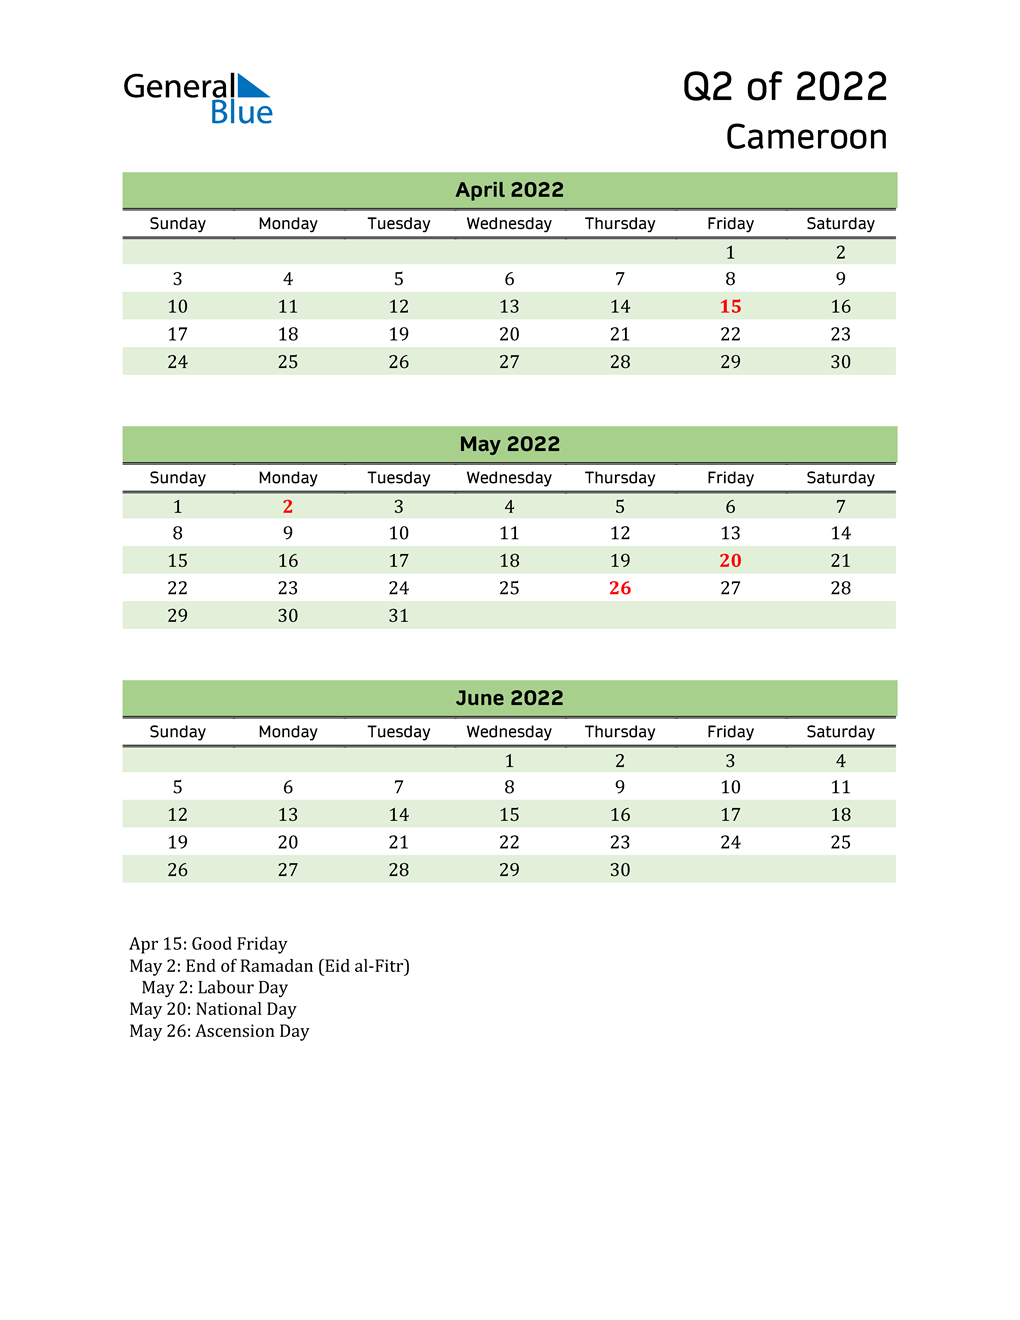  Quarterly Calendar 2022 with Cameroon Holidays 